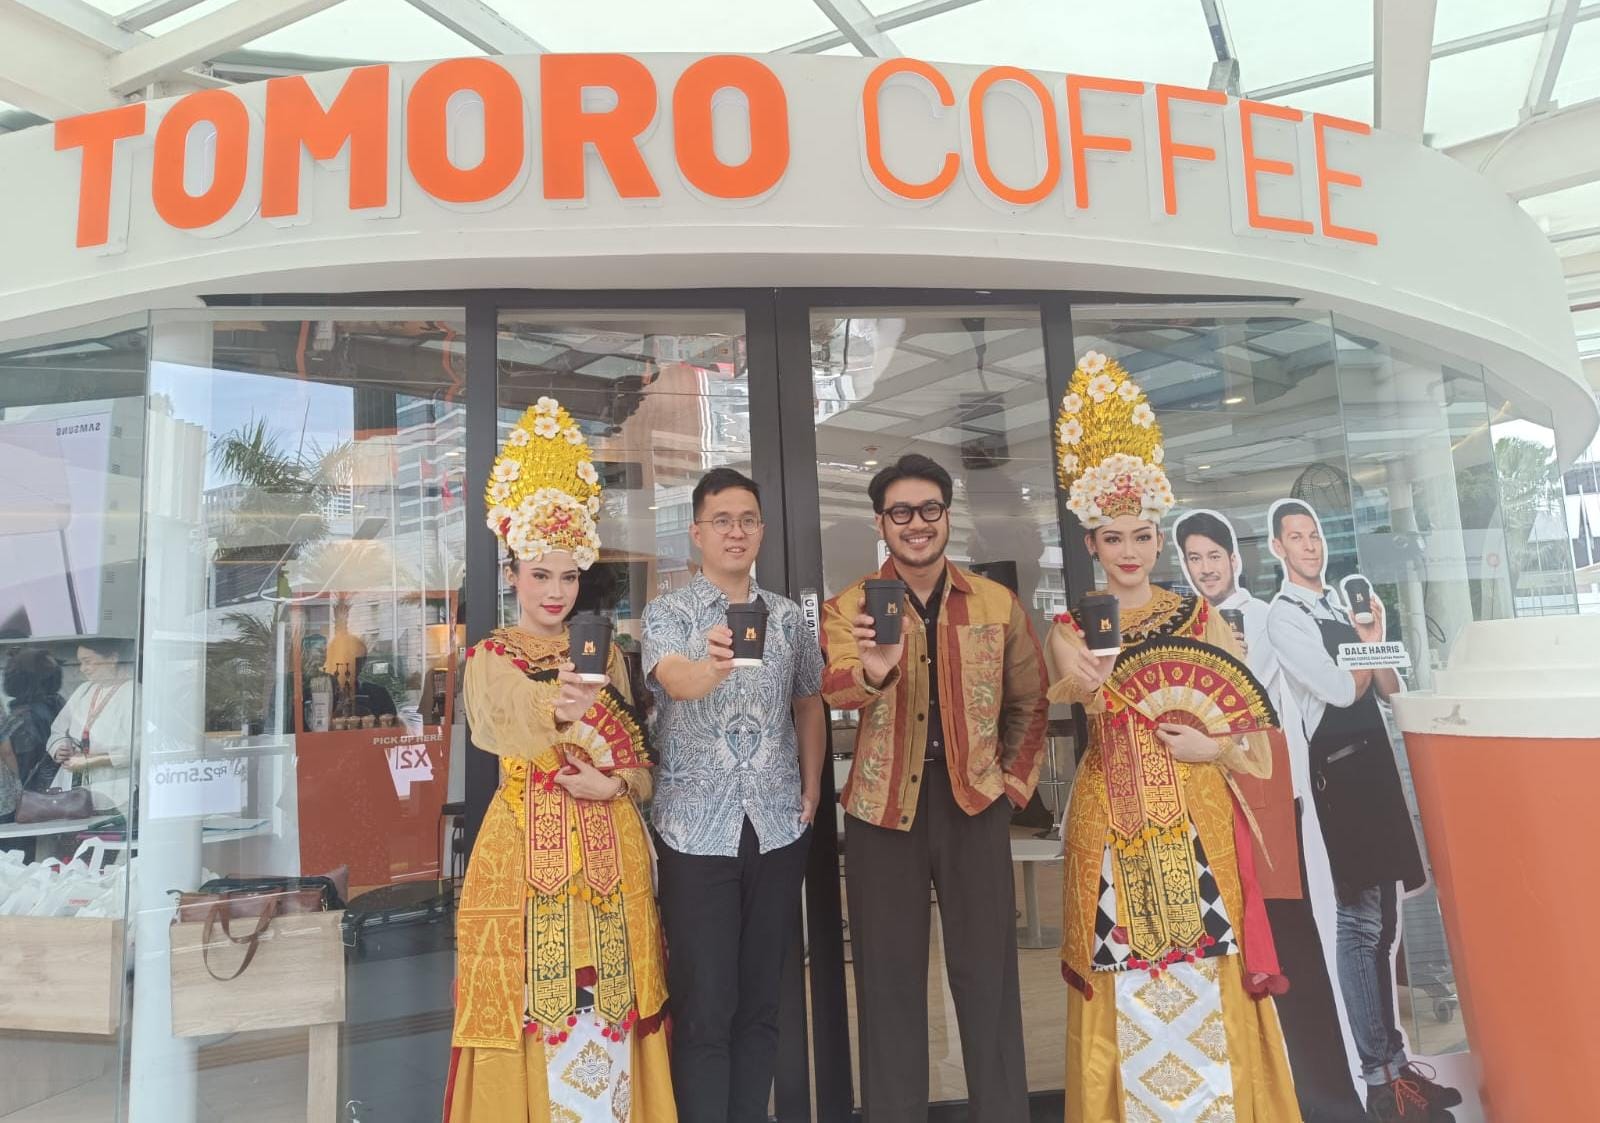 Tomoro Coffee Dukung Petani Lokal dan Bawa Kopi Indonesia Mendunia / Istimewa